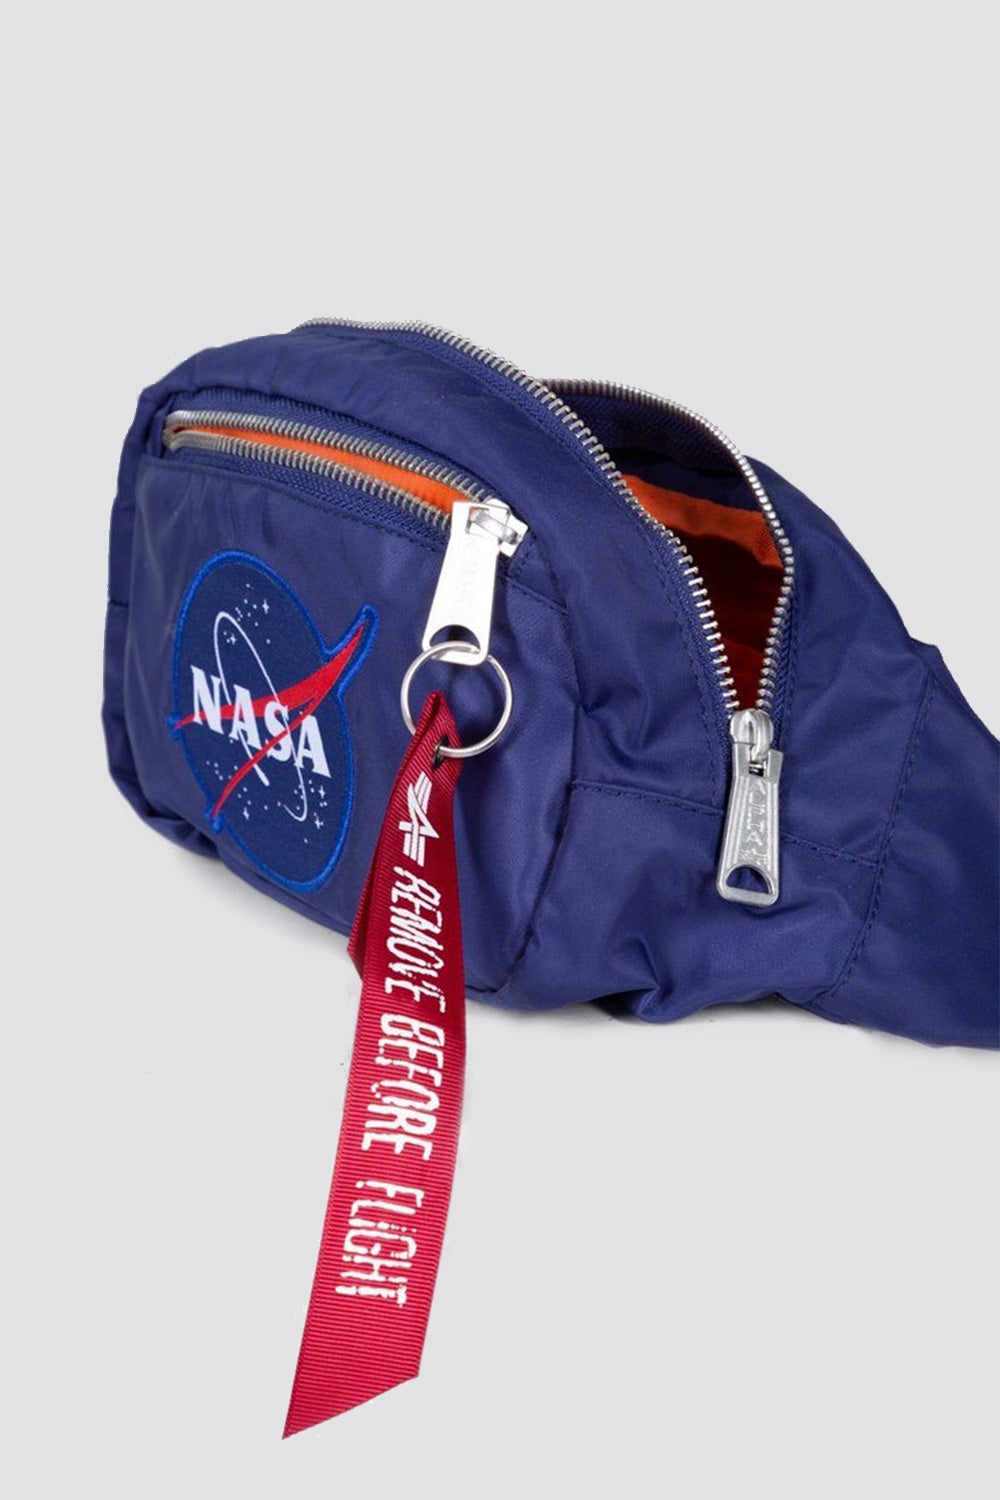 NASA WAIST BAG ACCESSORY Alpha Industries, Inc. 